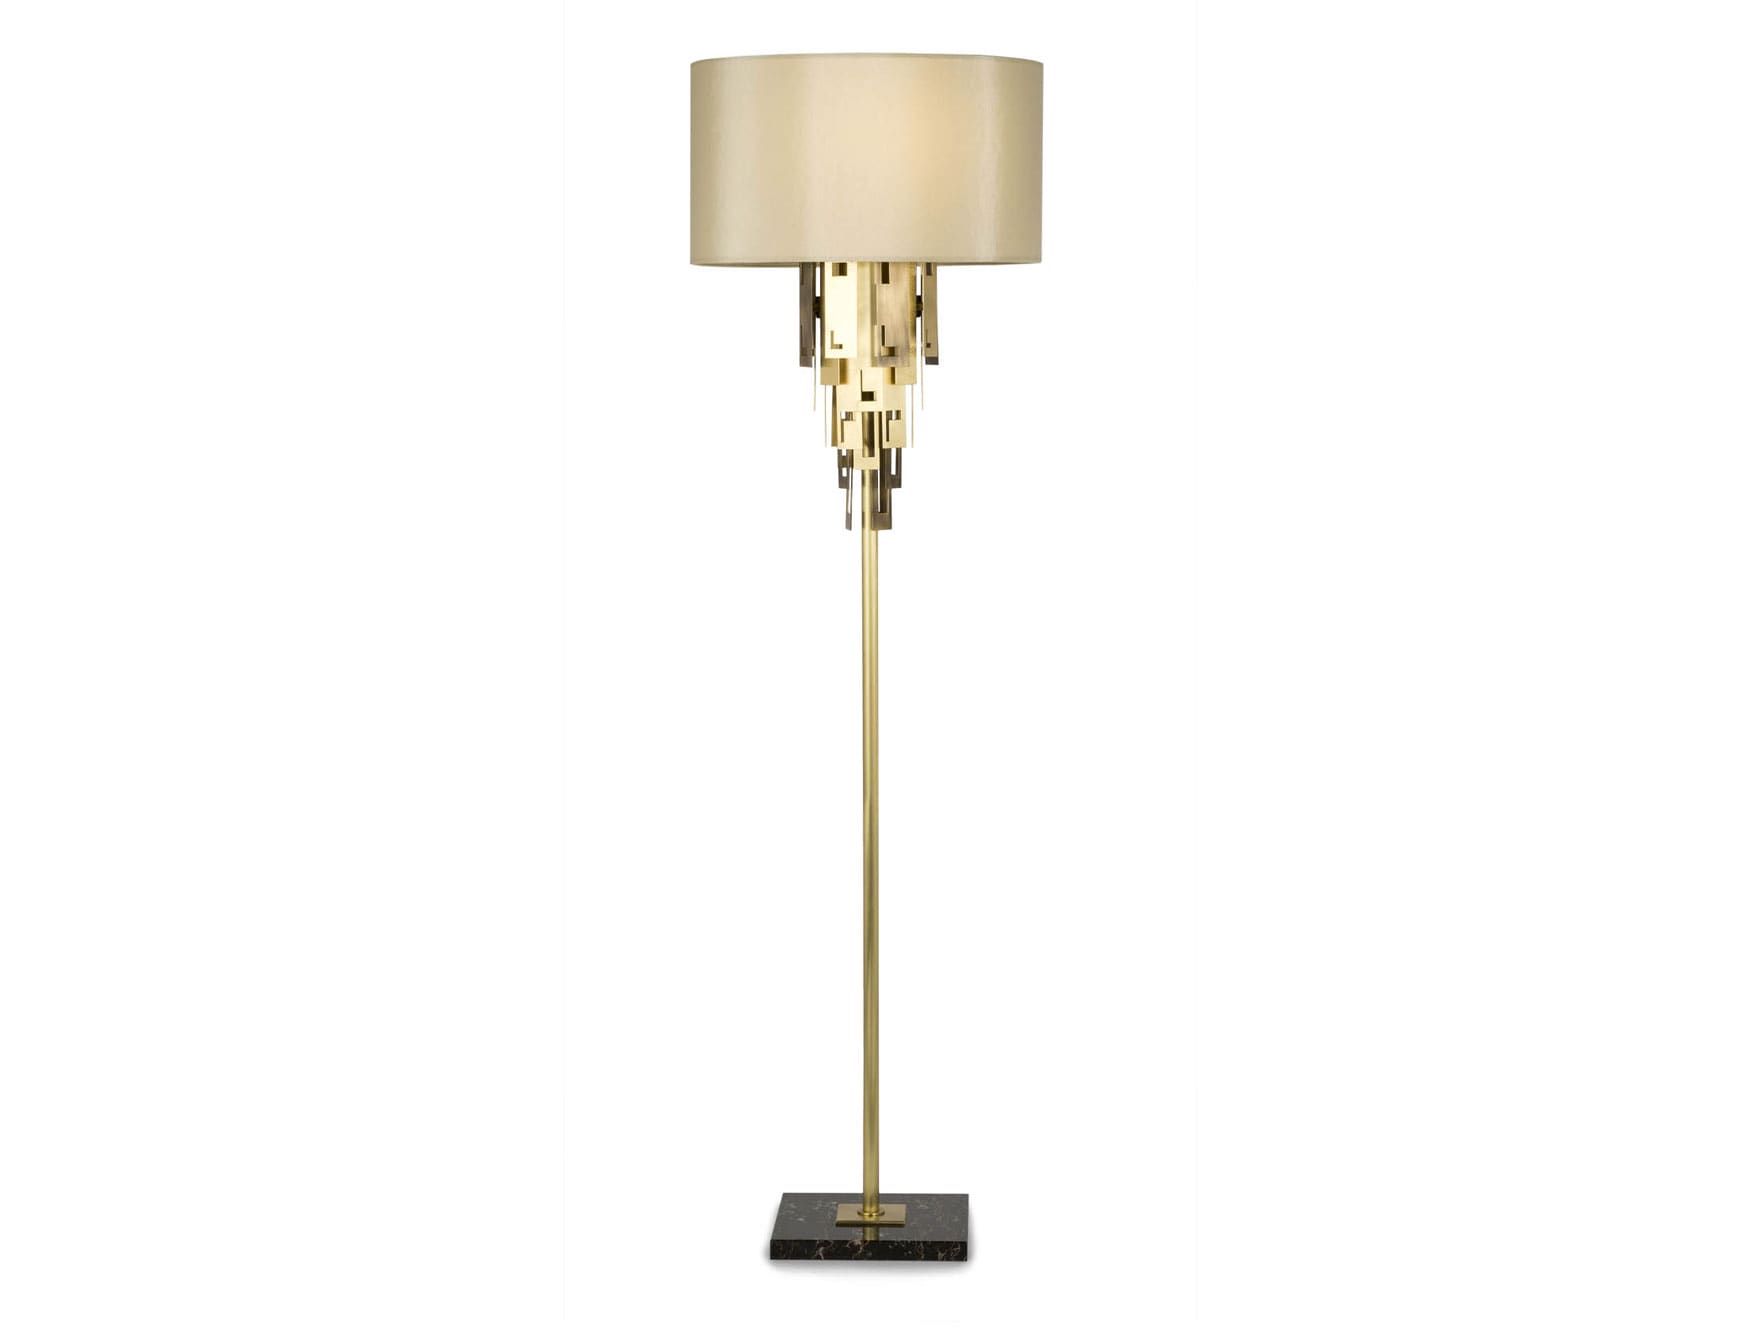 Glam modern Italian floor lamp with gold metal